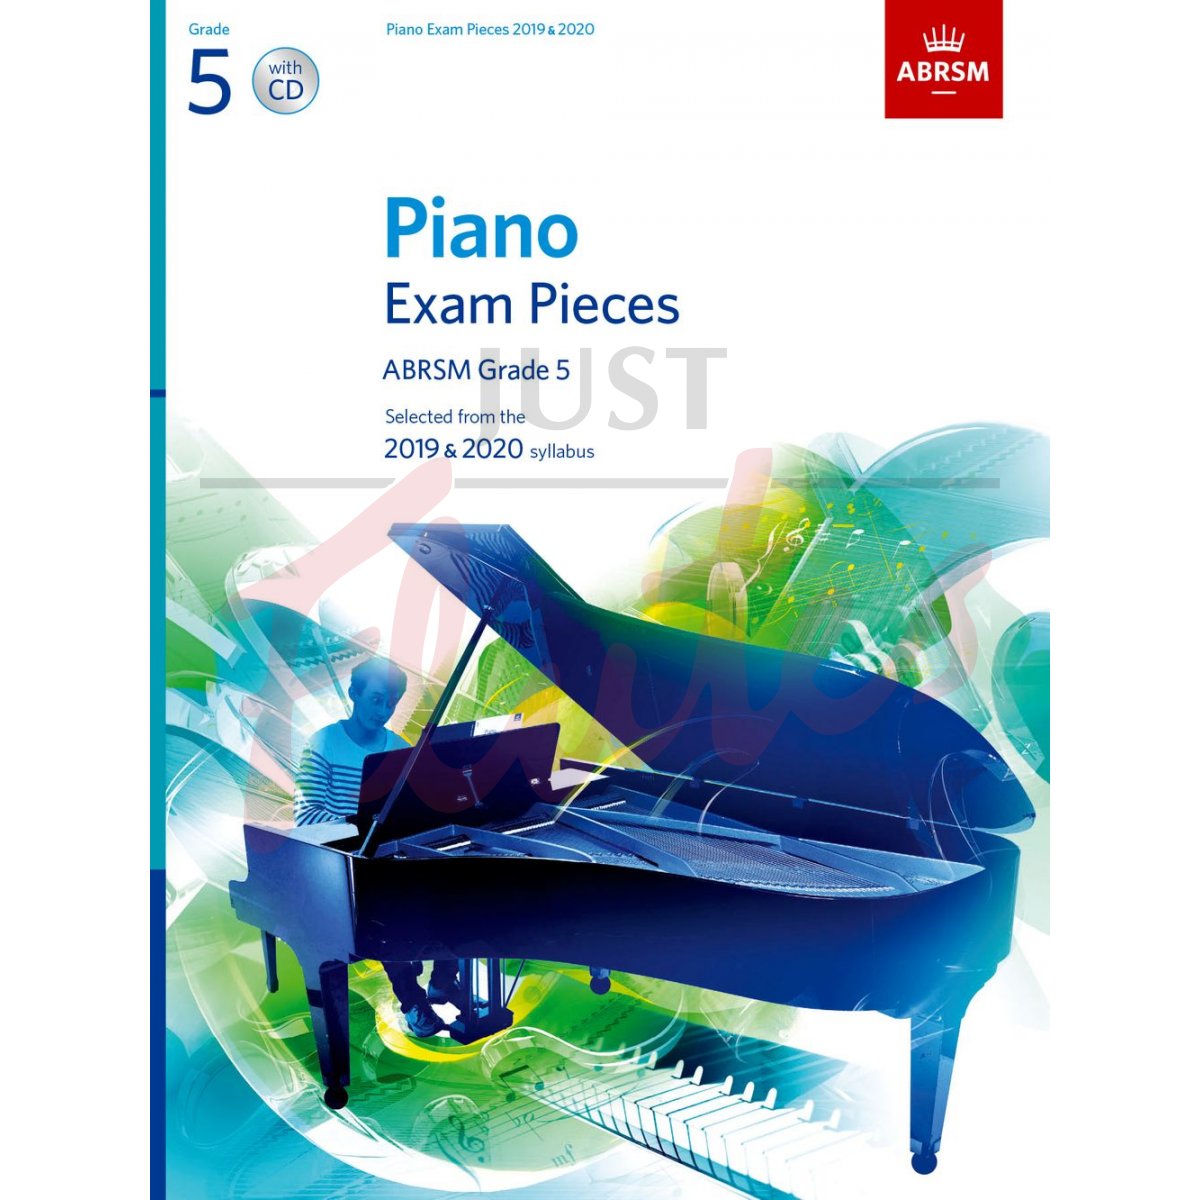 Piano Exam Pieces 2019-2020, Grade 5